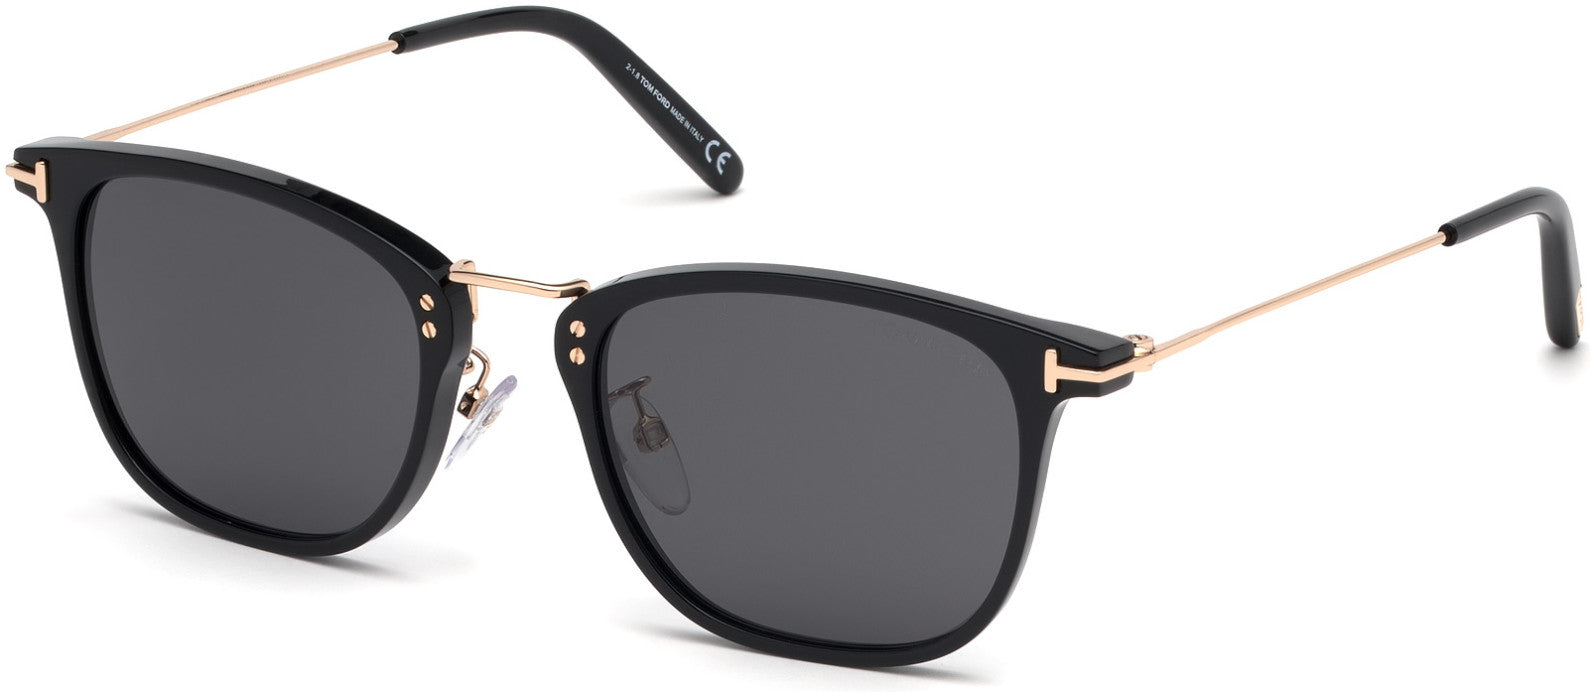 Tom Ford FT0672 Beau Geometric Sunglasses 01A-01A - Shiny Black, Shiny Rose Gold / Smoke Lenses